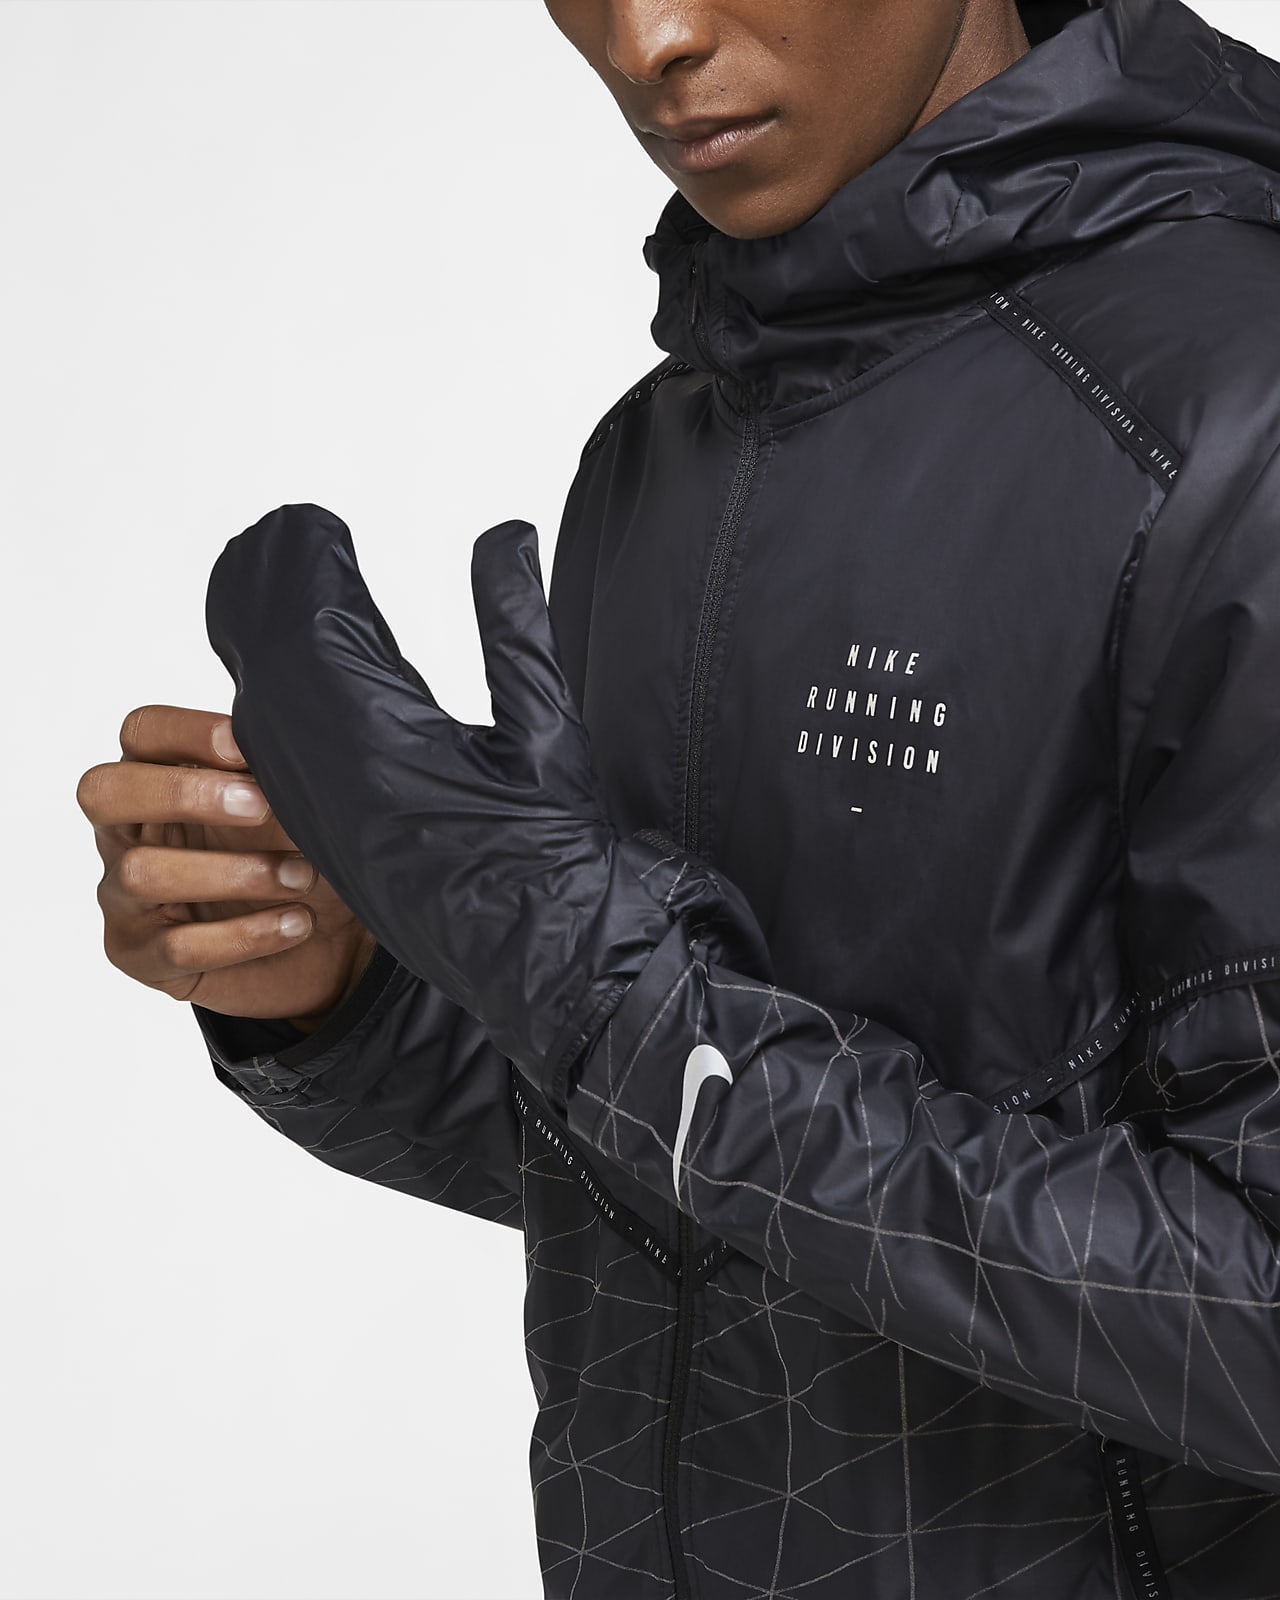 con tiempo Ingenioso Shipley Nike Essential Flash Jacket Men Factory Sale, UP TO 58% OFF |  www.apmusicales.com